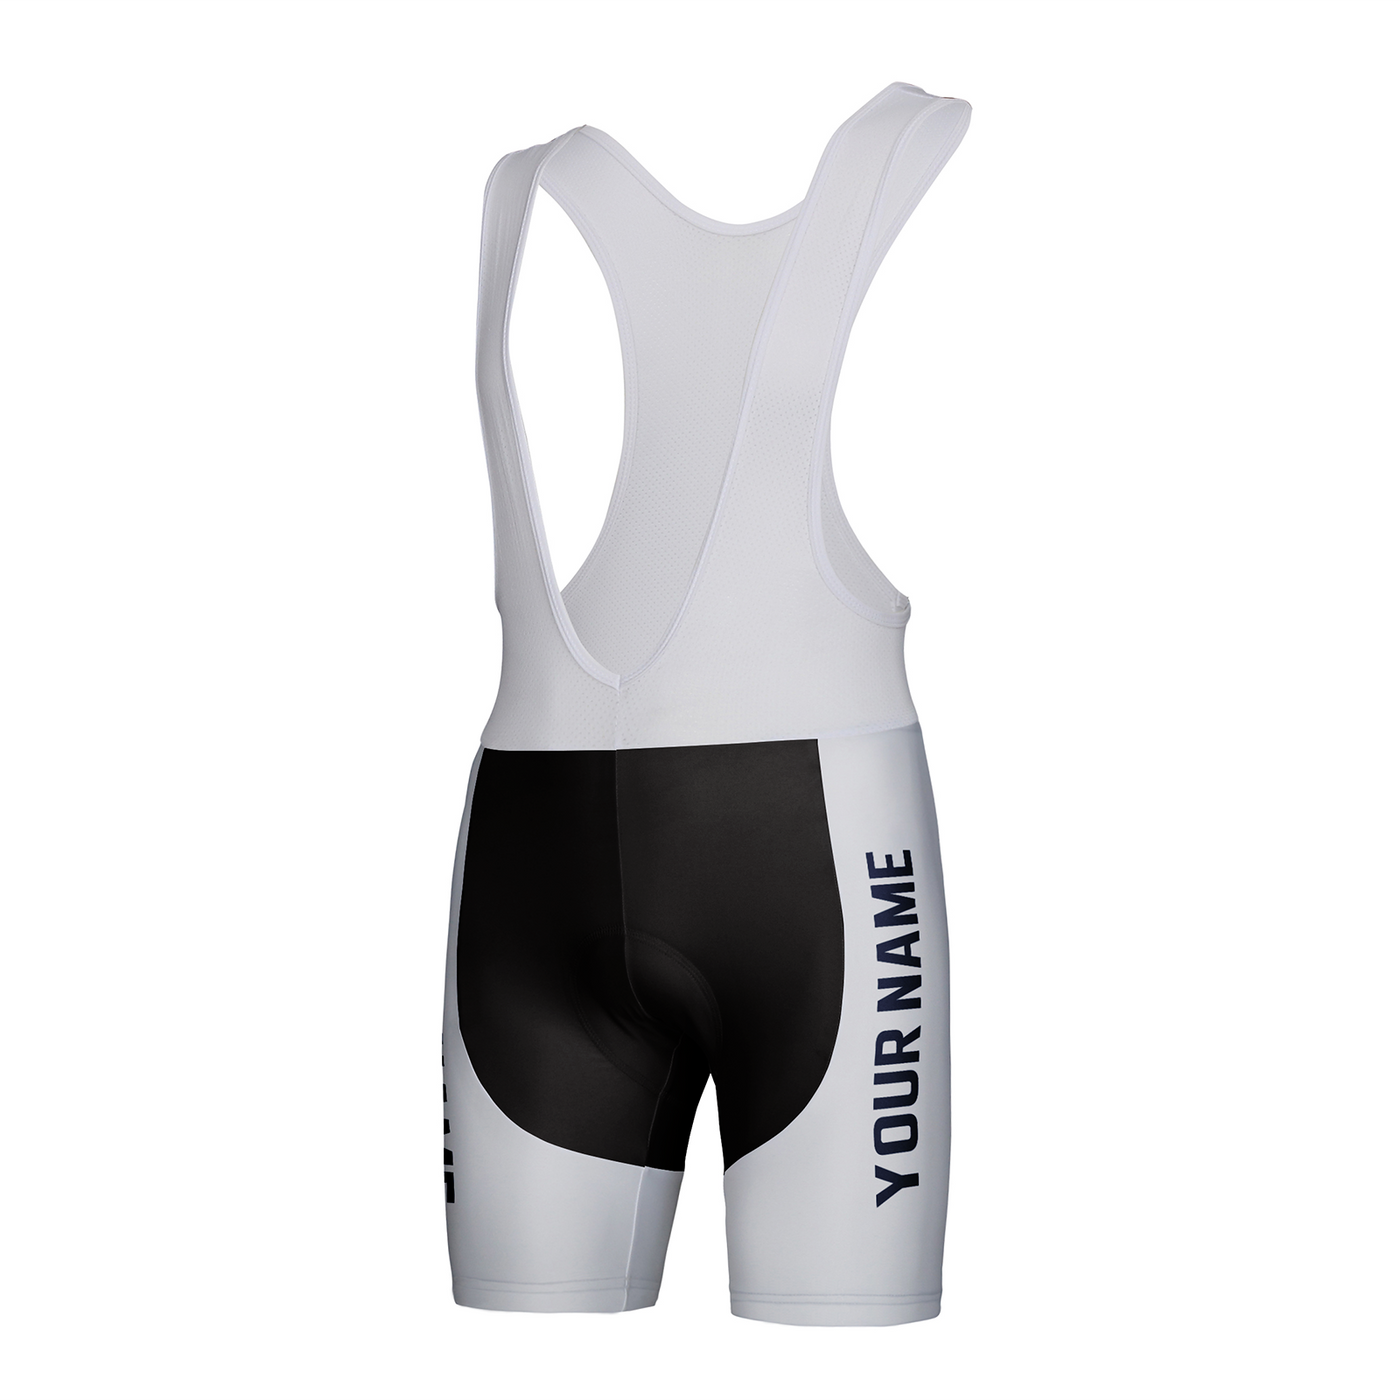 Customized New England Team Unisex Cycling Bib Shorts